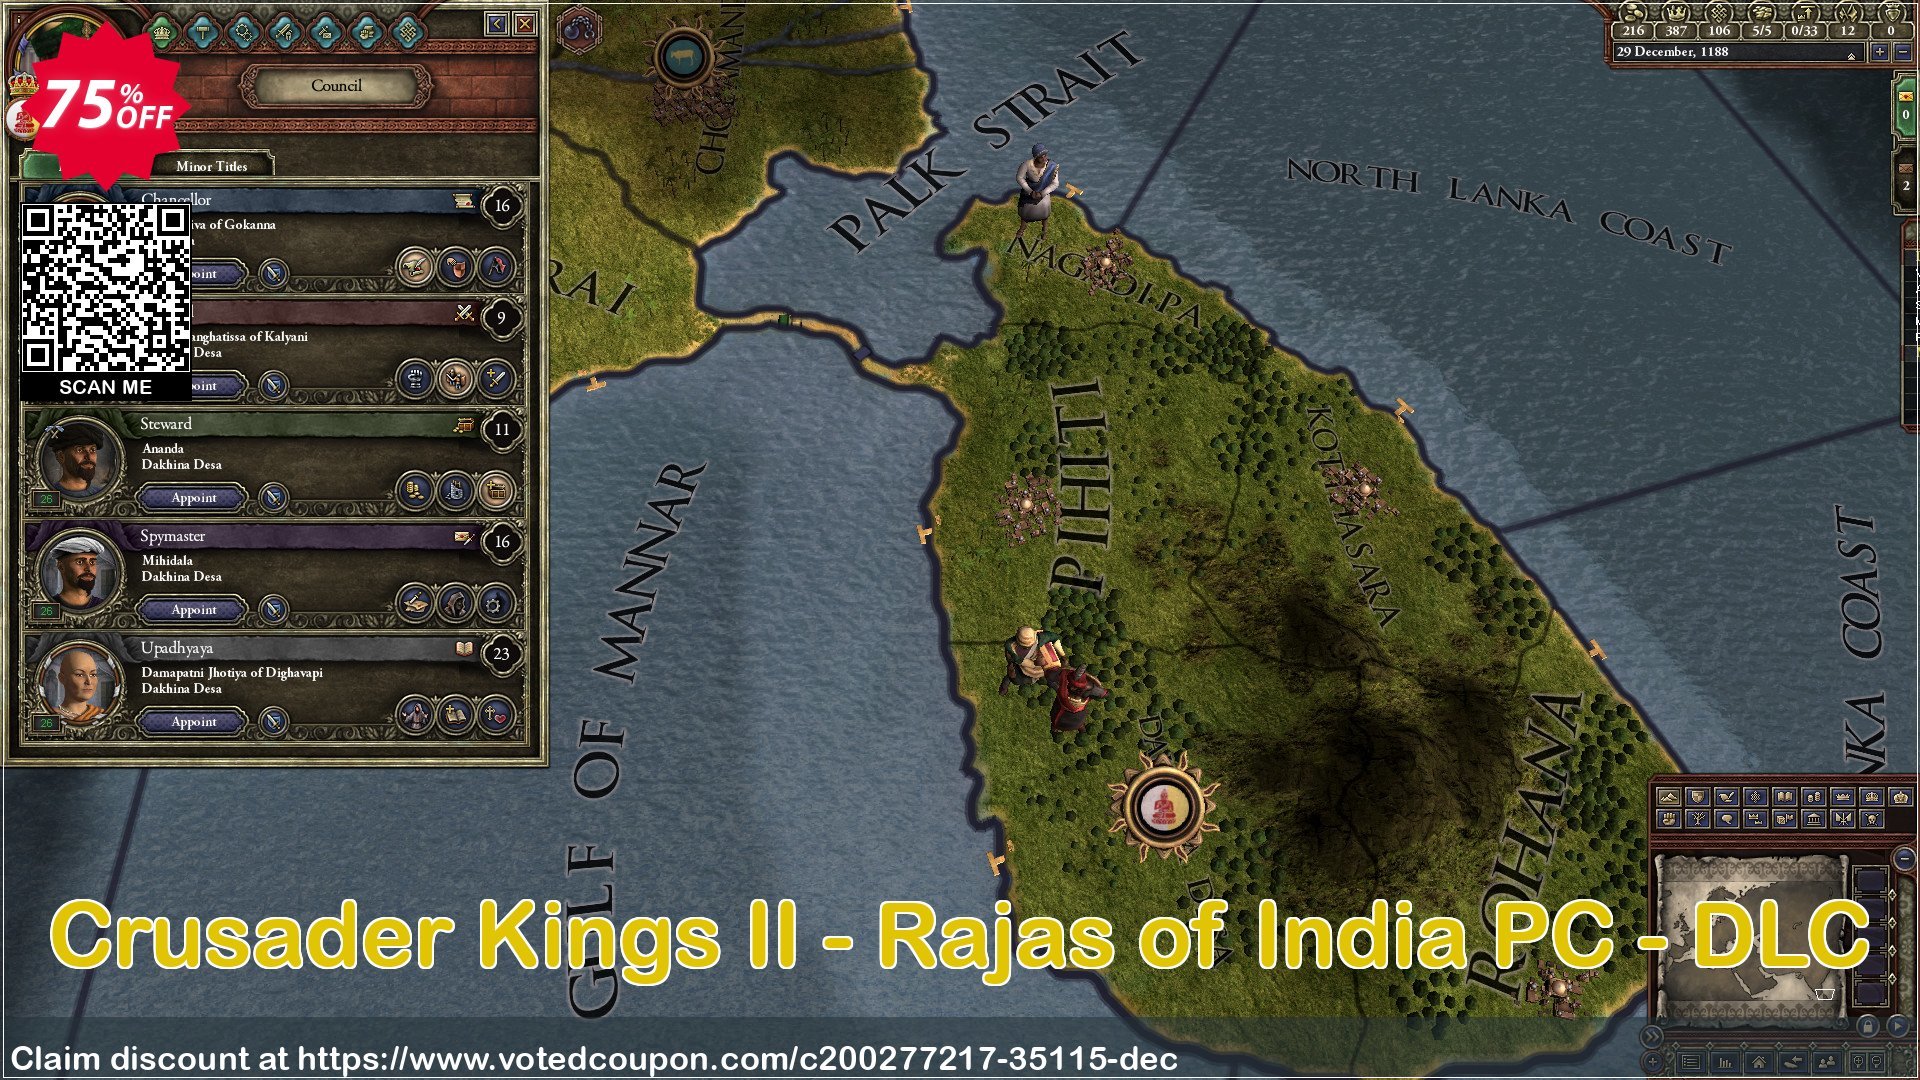 Crusader Kings II - Rajas of India PC - DLC Coupon Code May 2024, 75% OFF - VotedCoupon